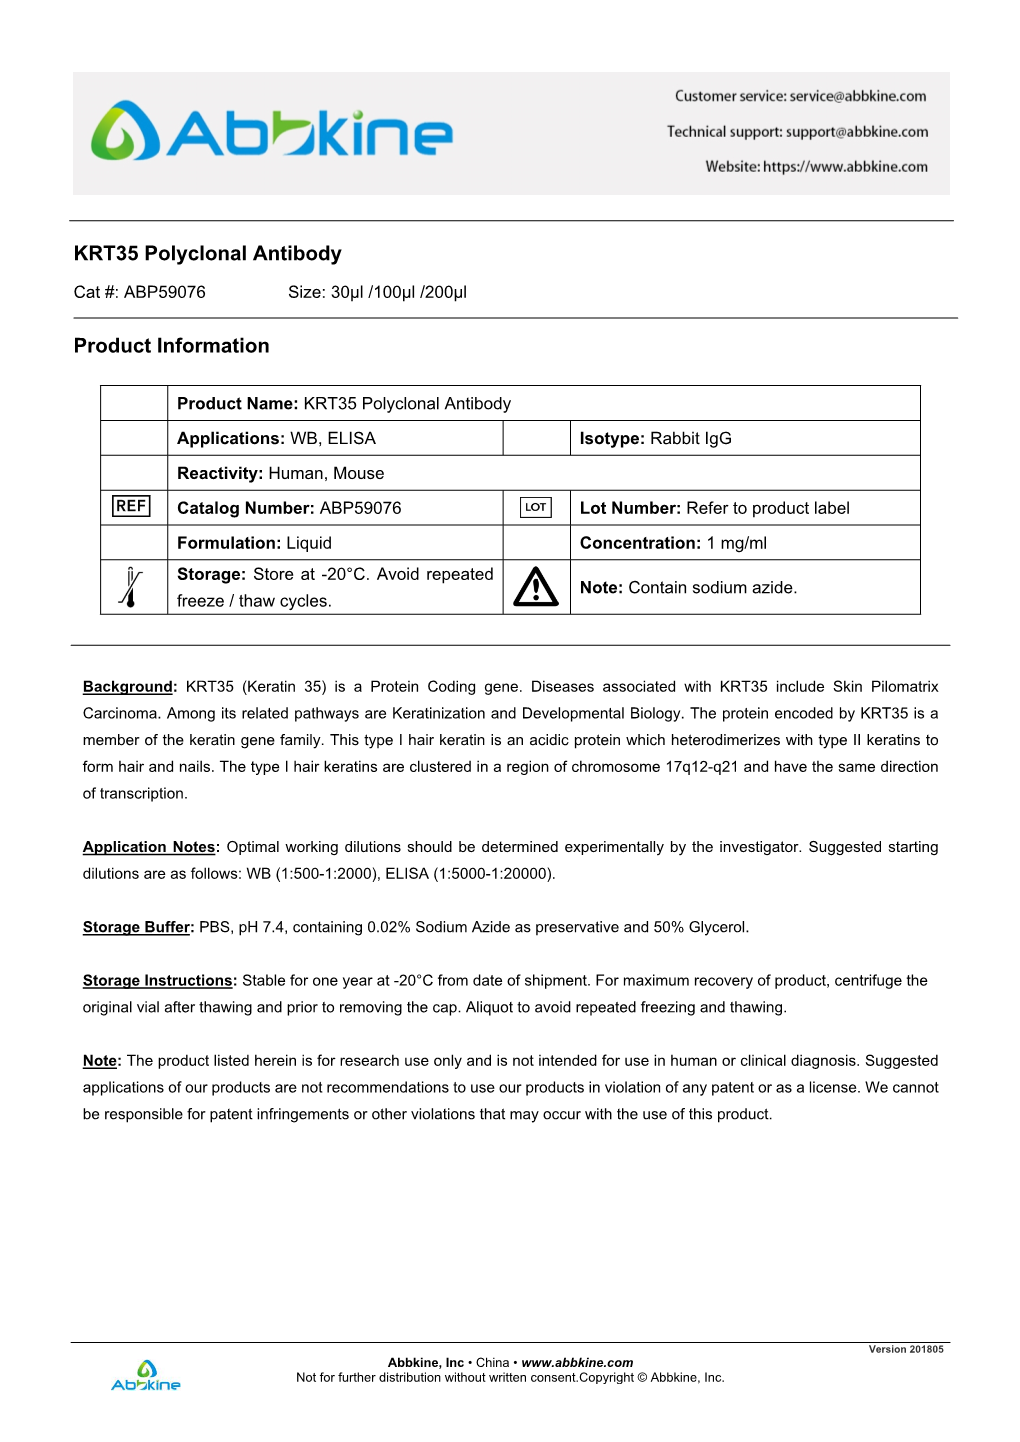 KRT35 Polyclonal Antibody Product Information